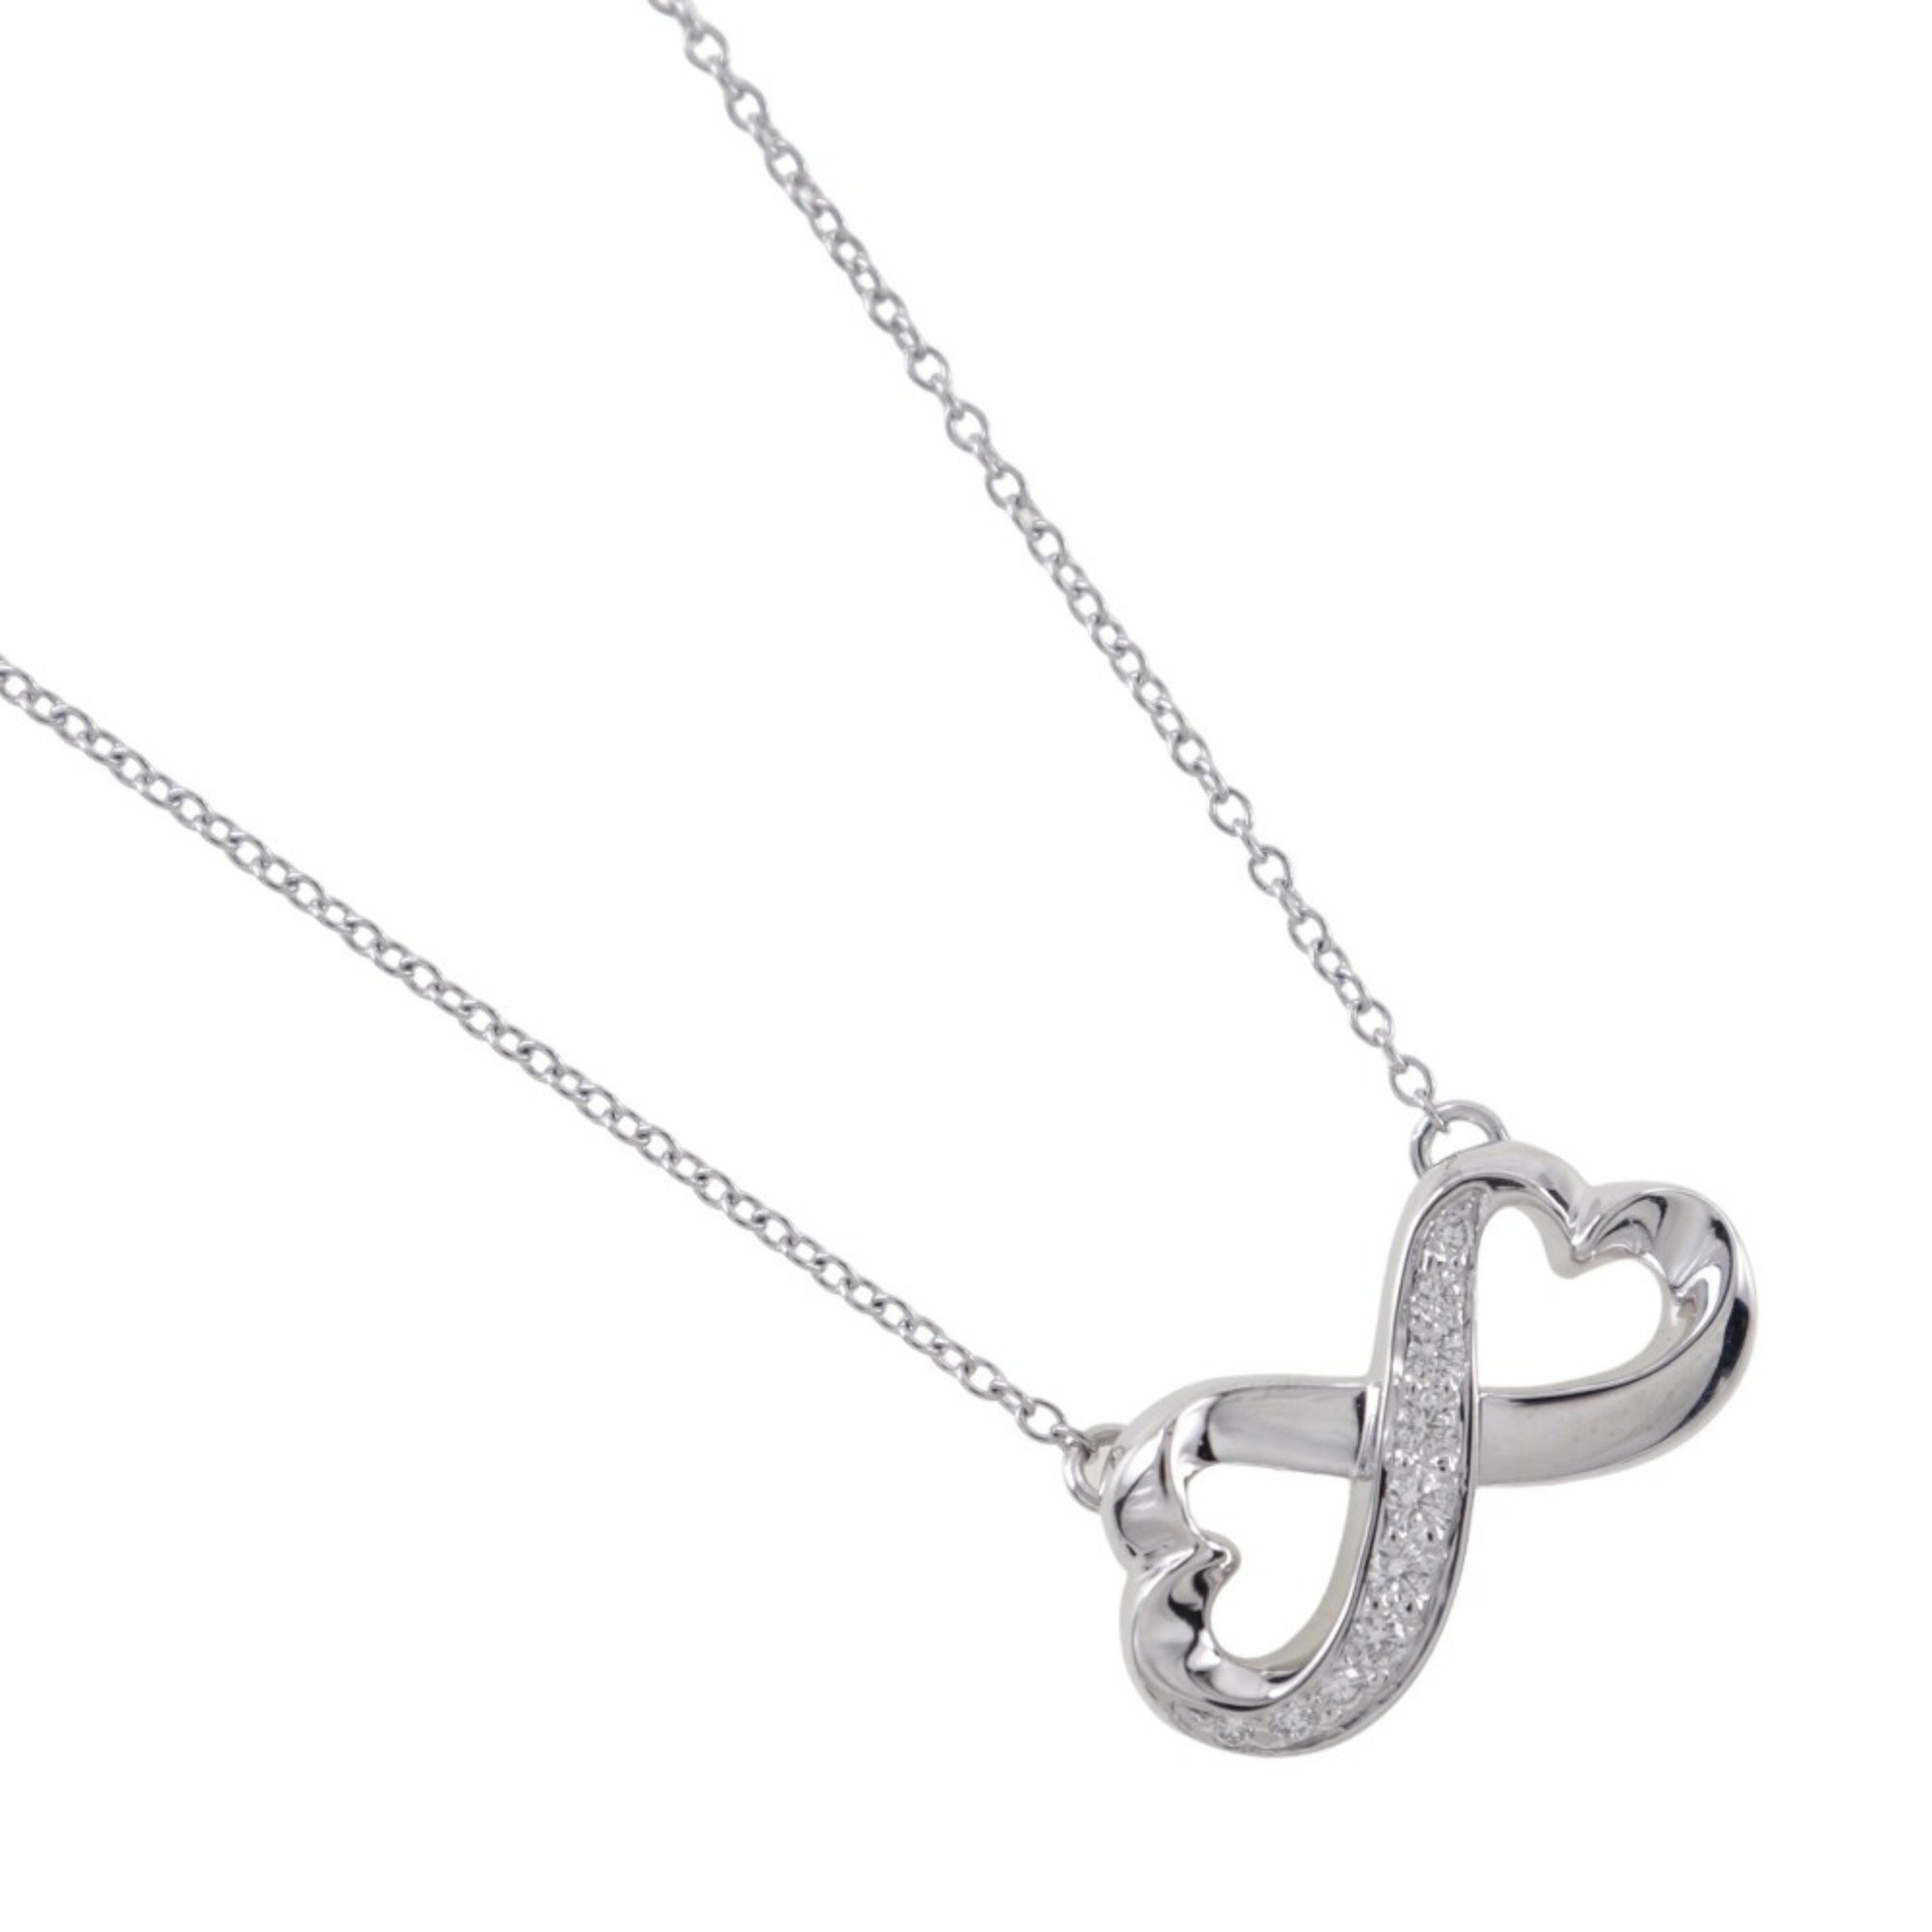 Tiffany & Co. Double Loving Heart Necklace, K18 White Gold x Diamond, Approx. 3.7g, rubbing heart, Women's